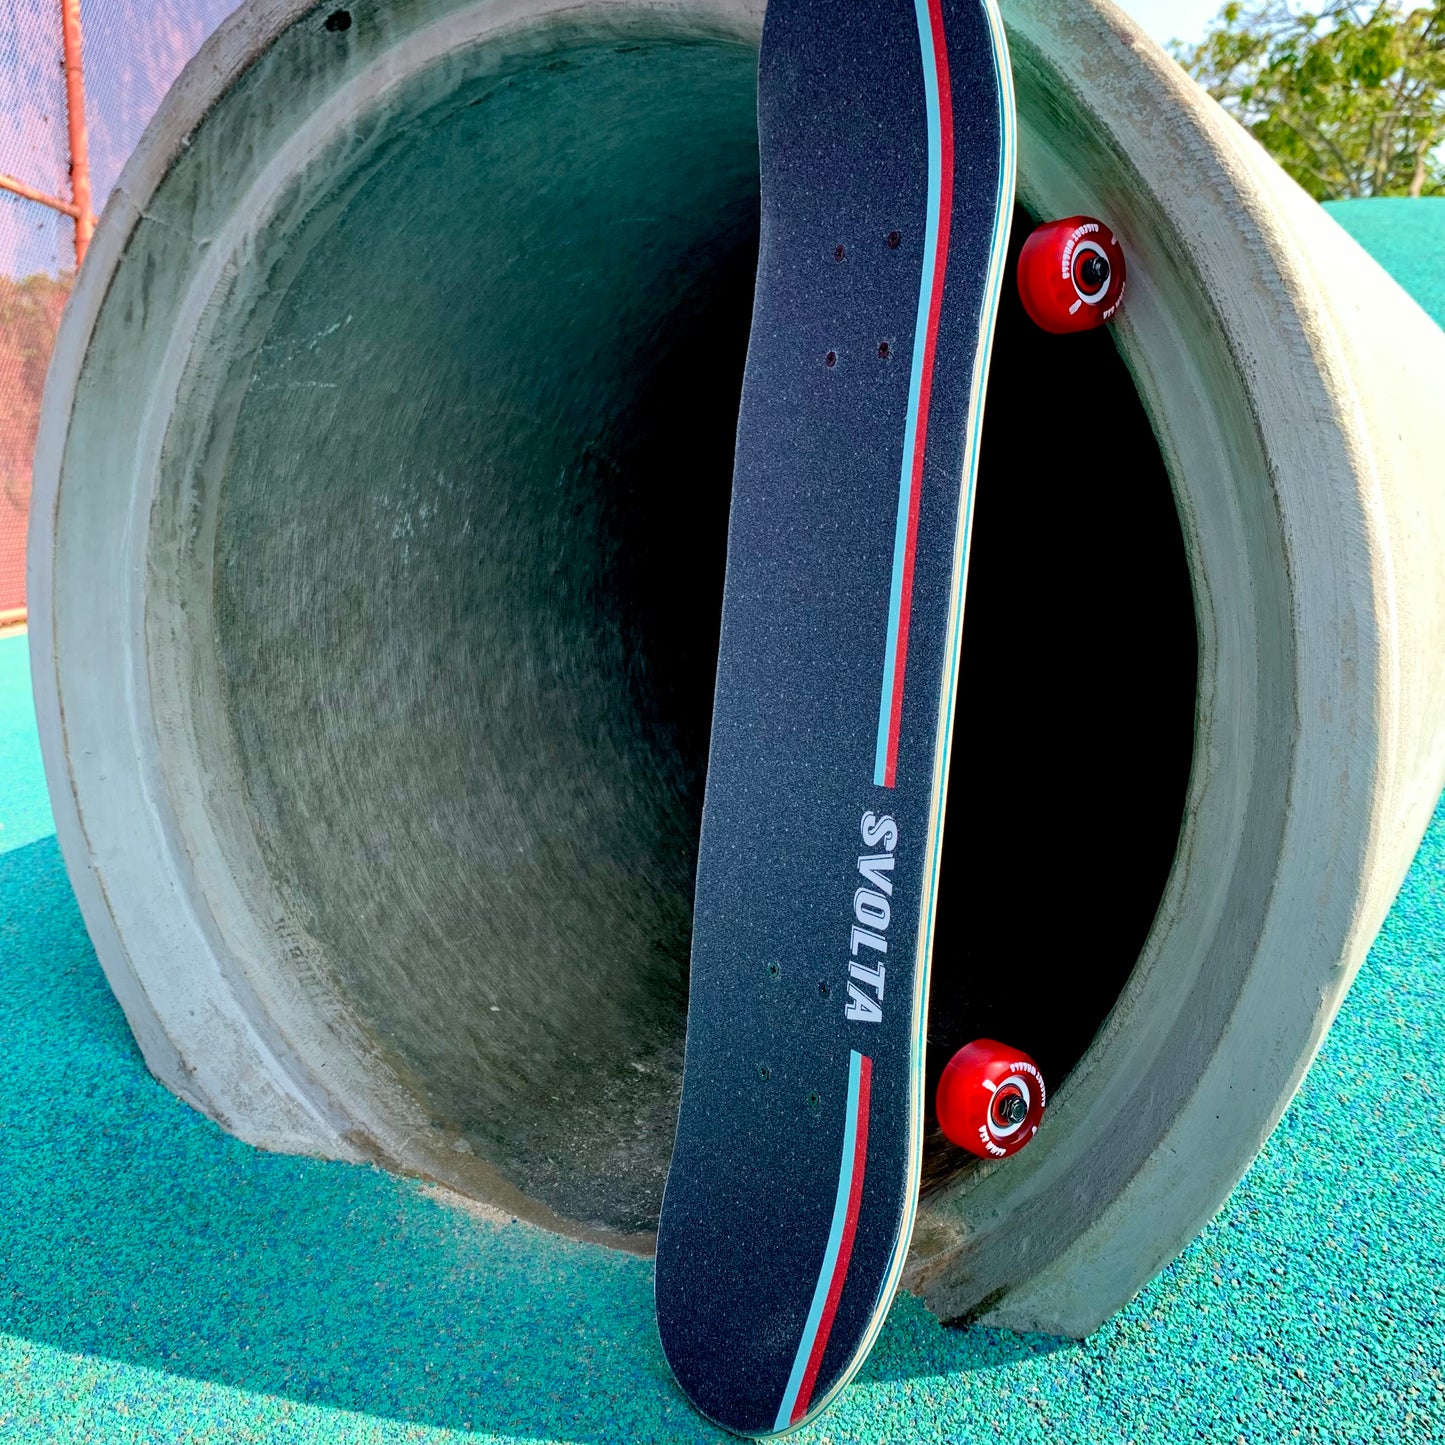 SVOLTA Bolts and Stripes Mini Skateboard - Limited Edition